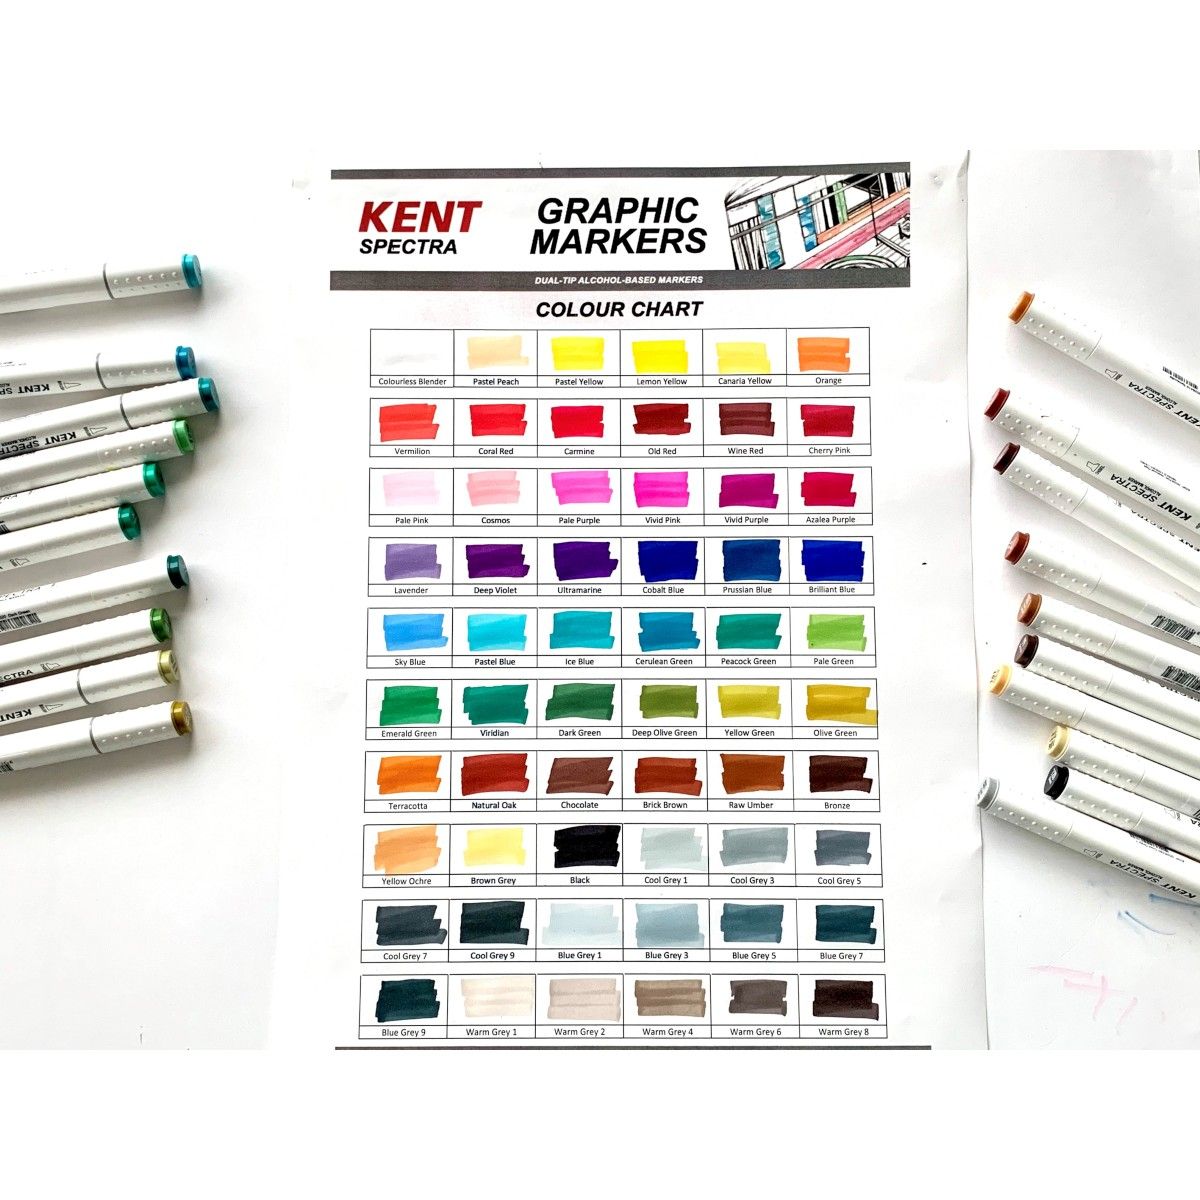 60 KENT Spectra Graphic Marker’s Colours